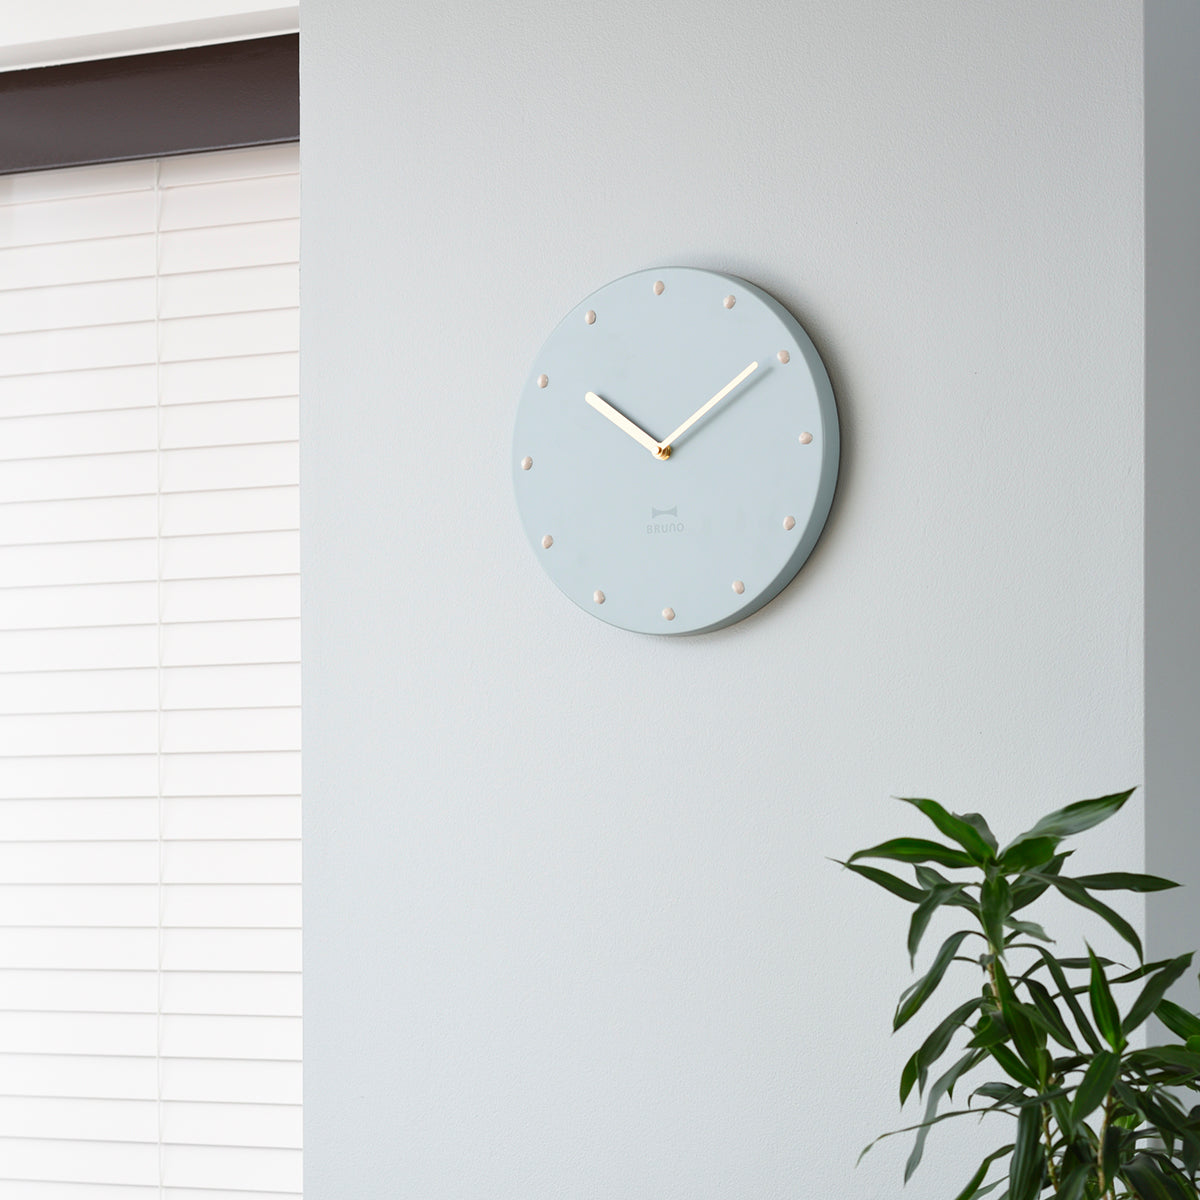 BRUNO Simple Metal Wall Clock - Blue Gray